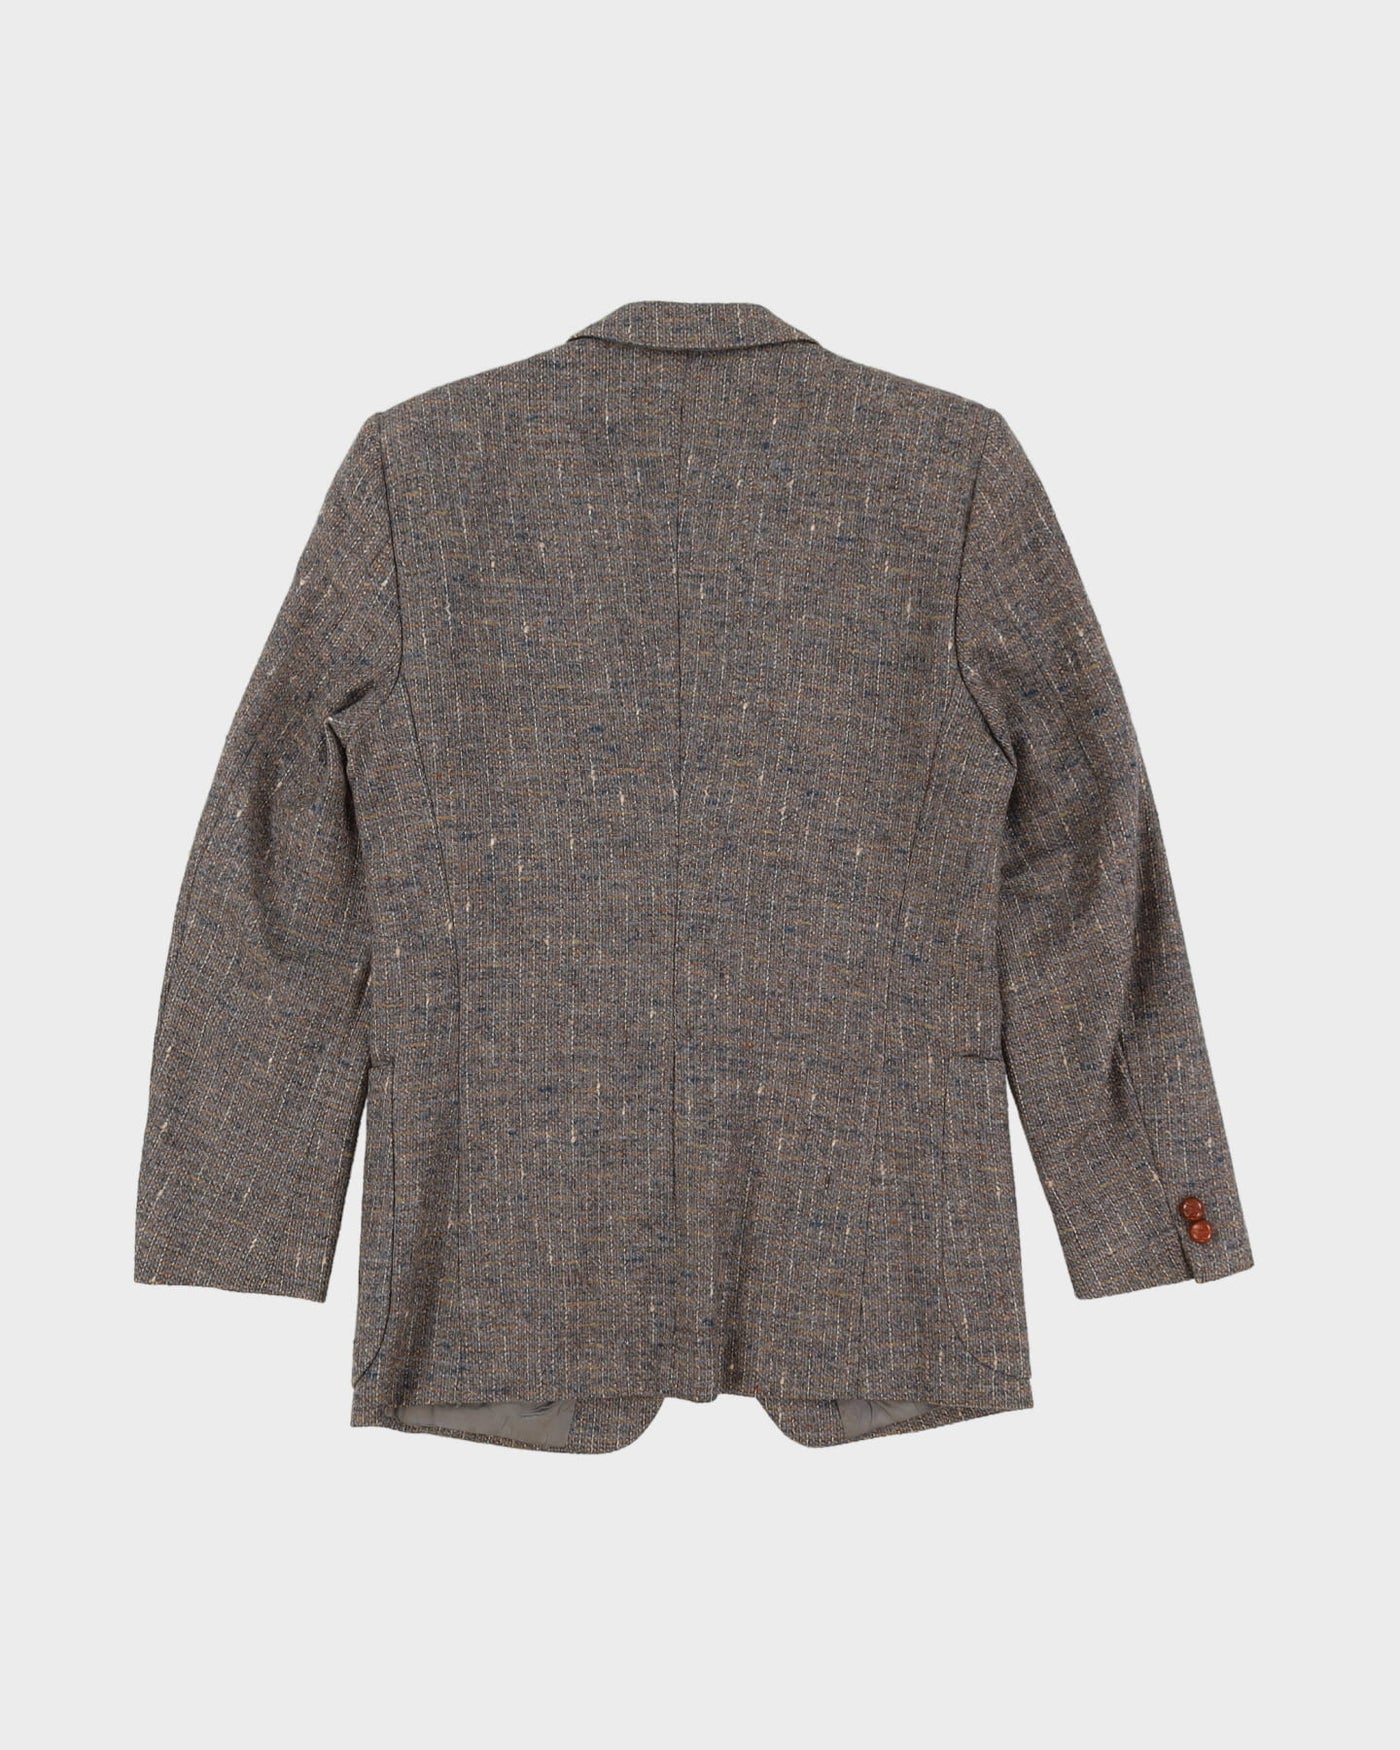 Yves Saint Laurent 1970s Wool Tweed Blazer Jacket - XXXS